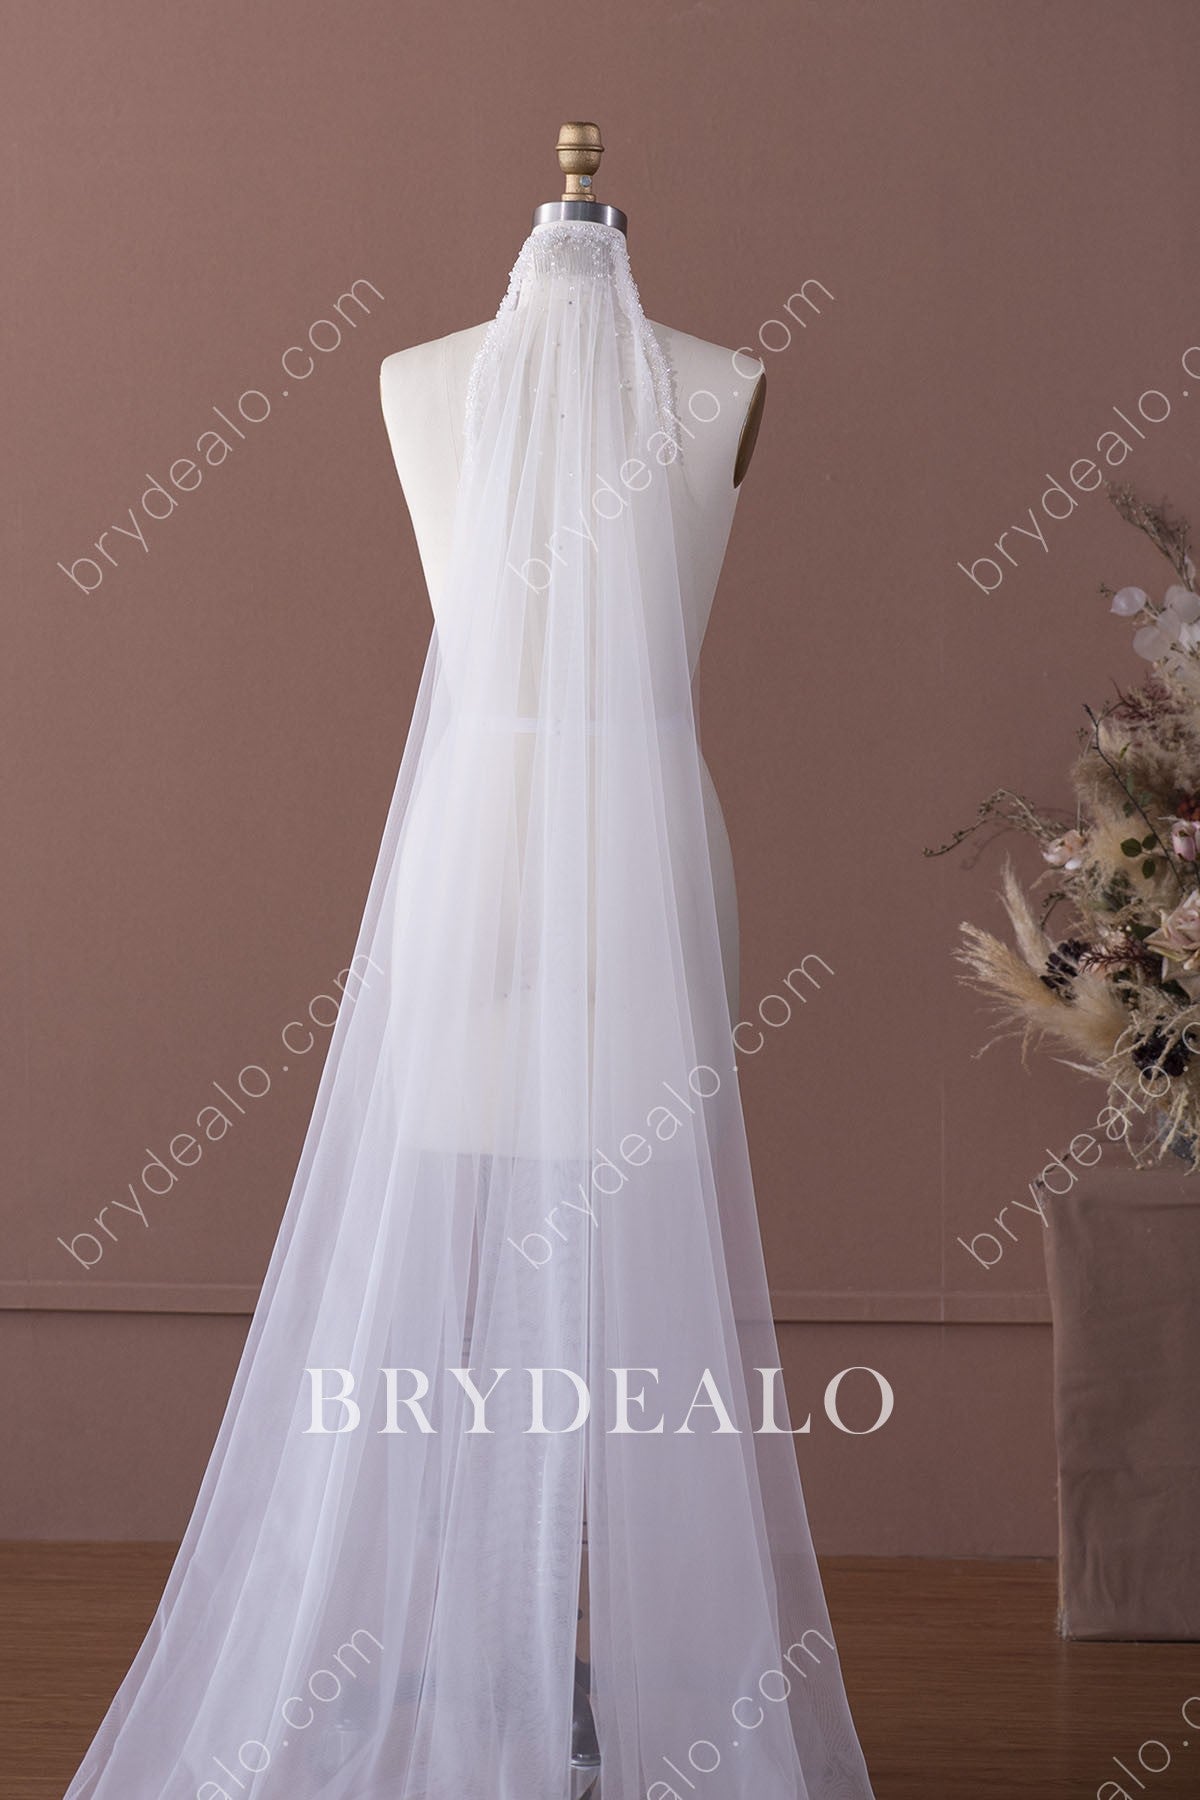 crystal-bridal-veil